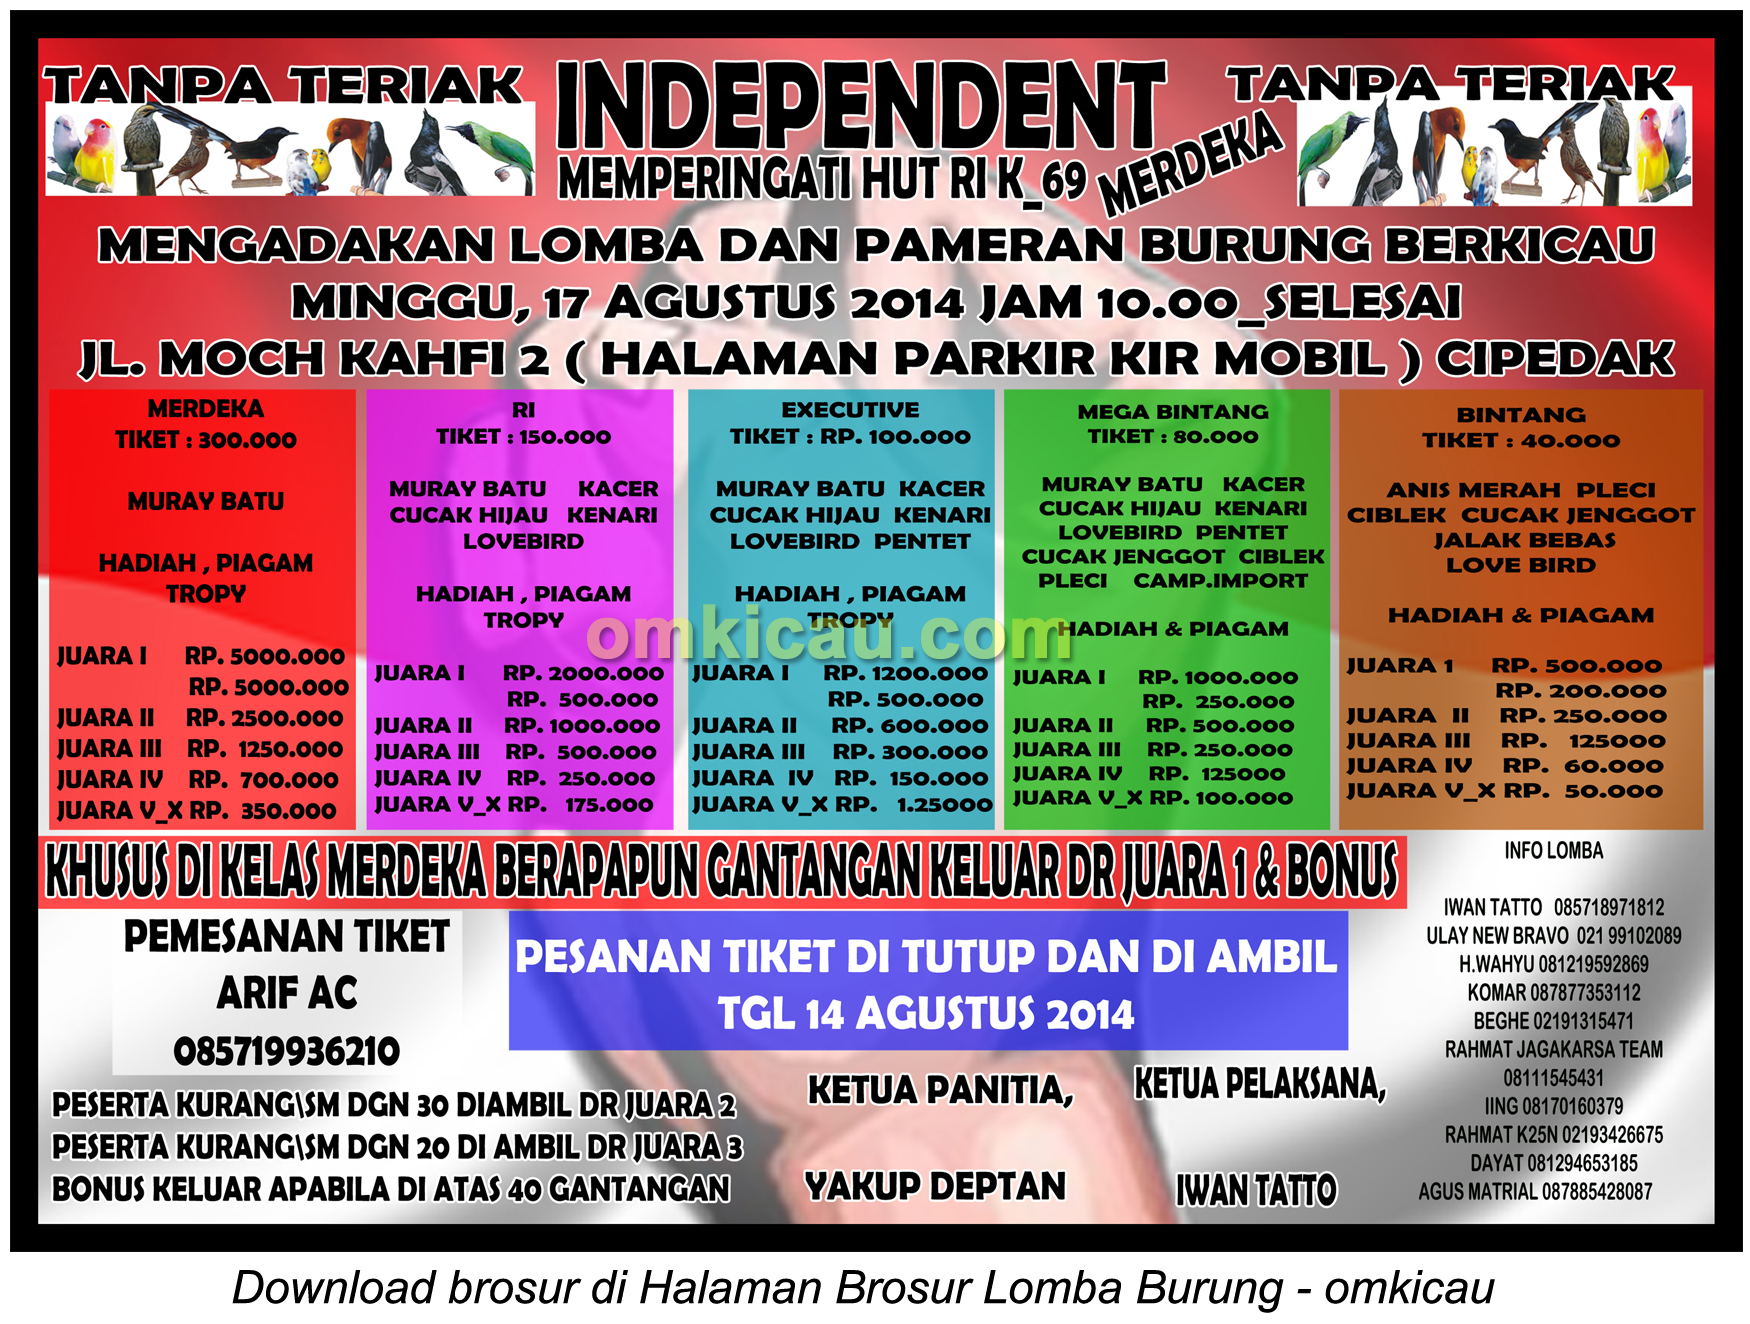 Brosur Lomba Burung 69Th Kemerdekaan RI - Independent Ent, Jakarta Selatan, 17 Agustus 2014